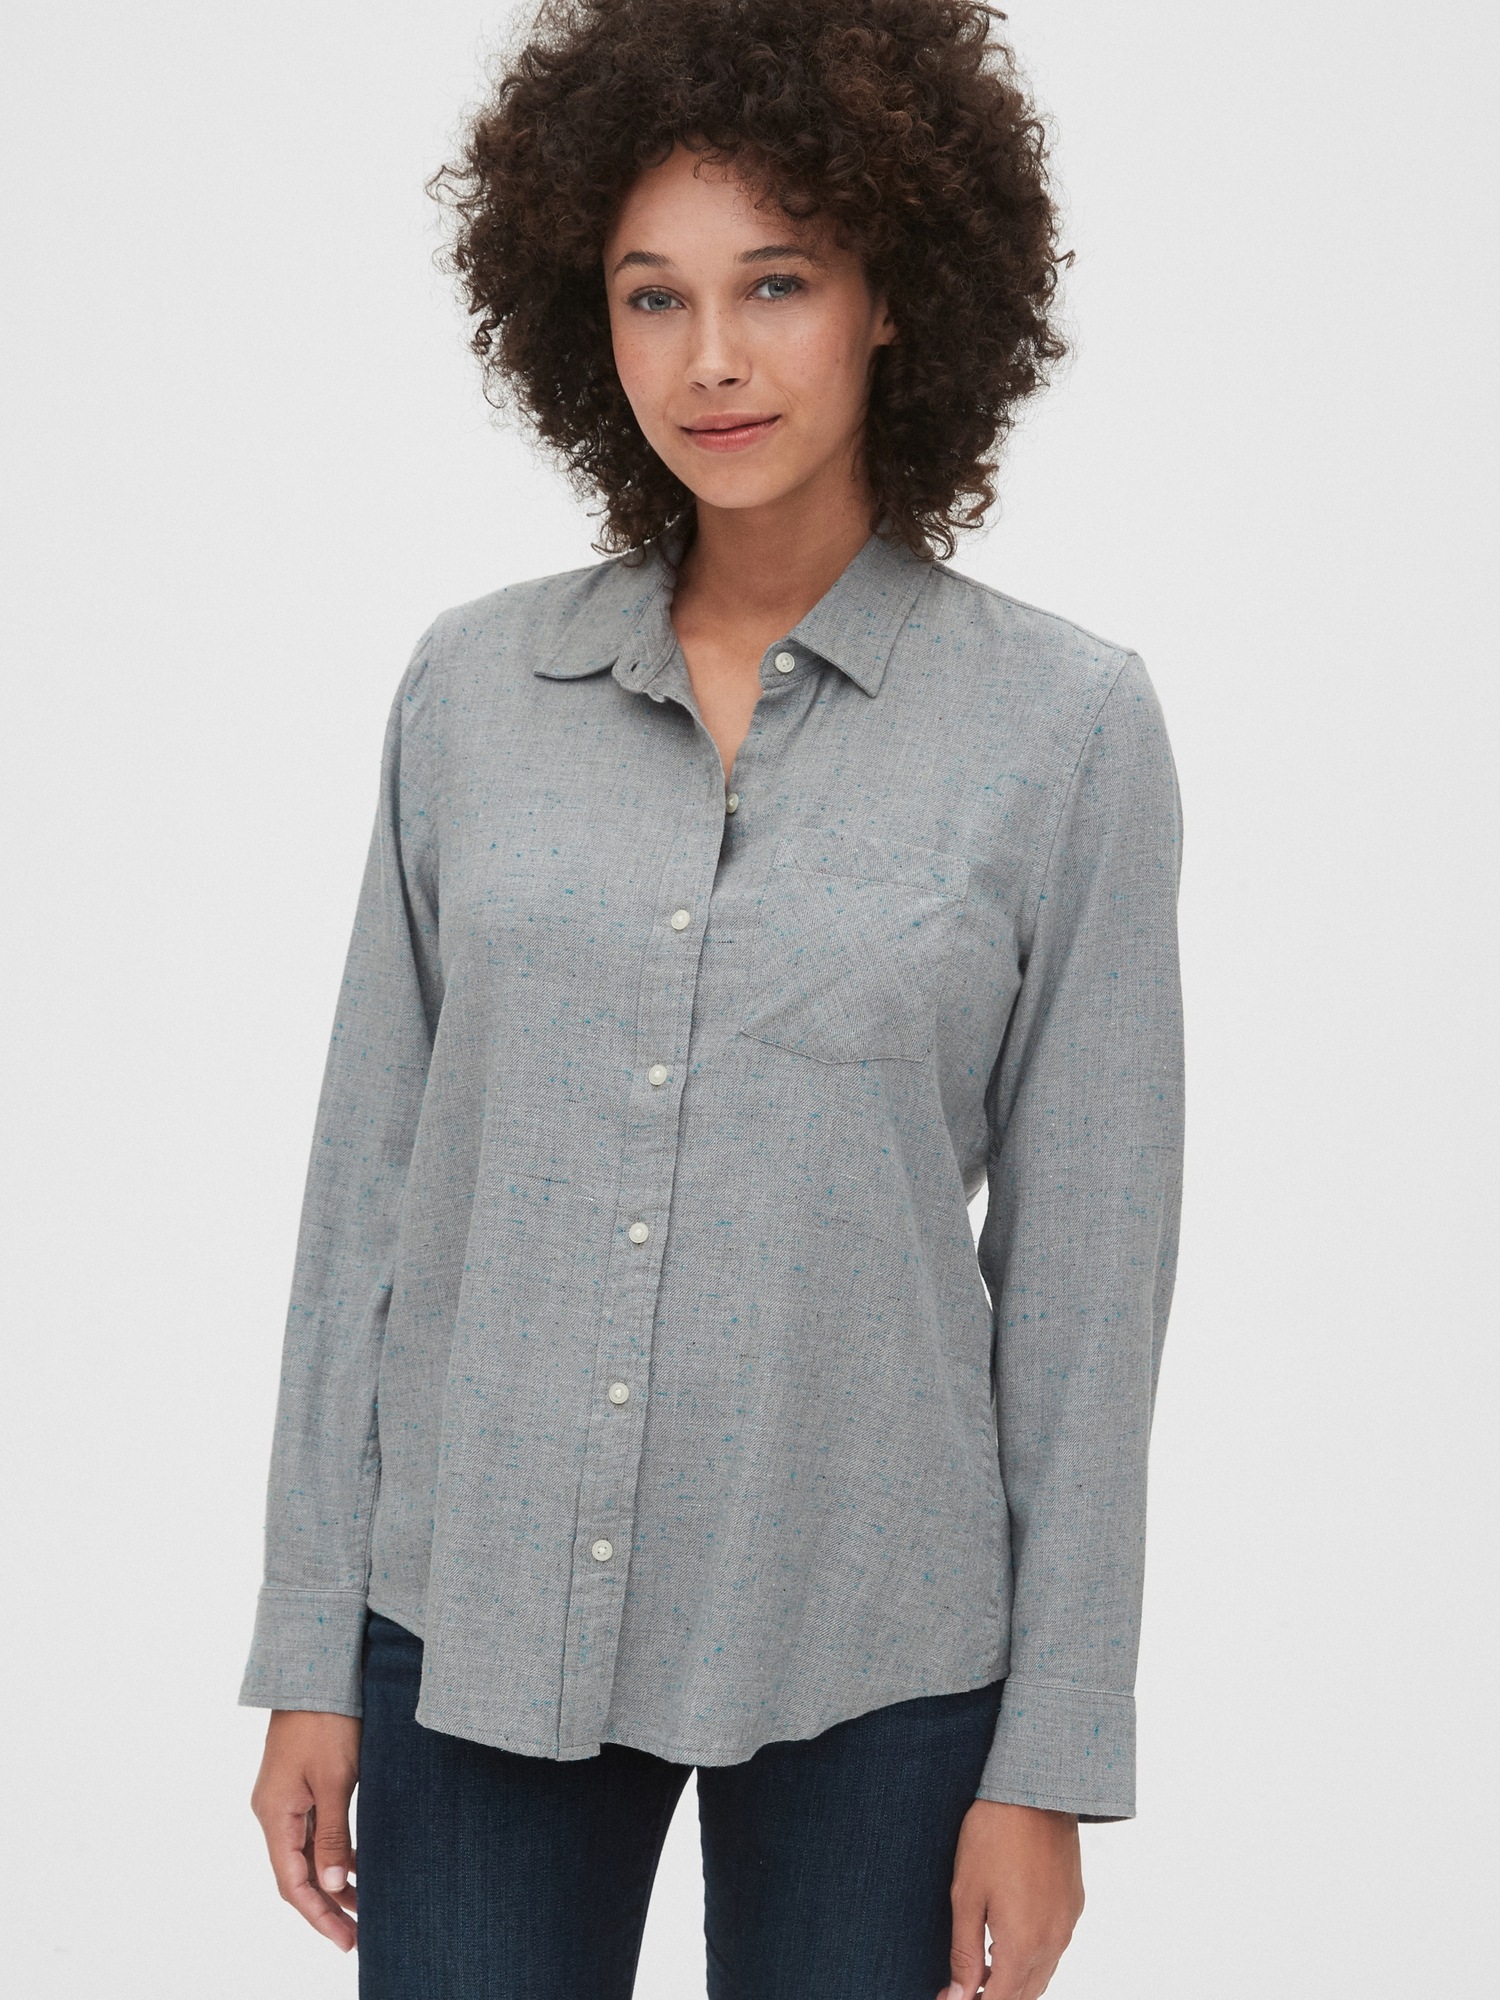 Speckled Flannel Shirt | Gap